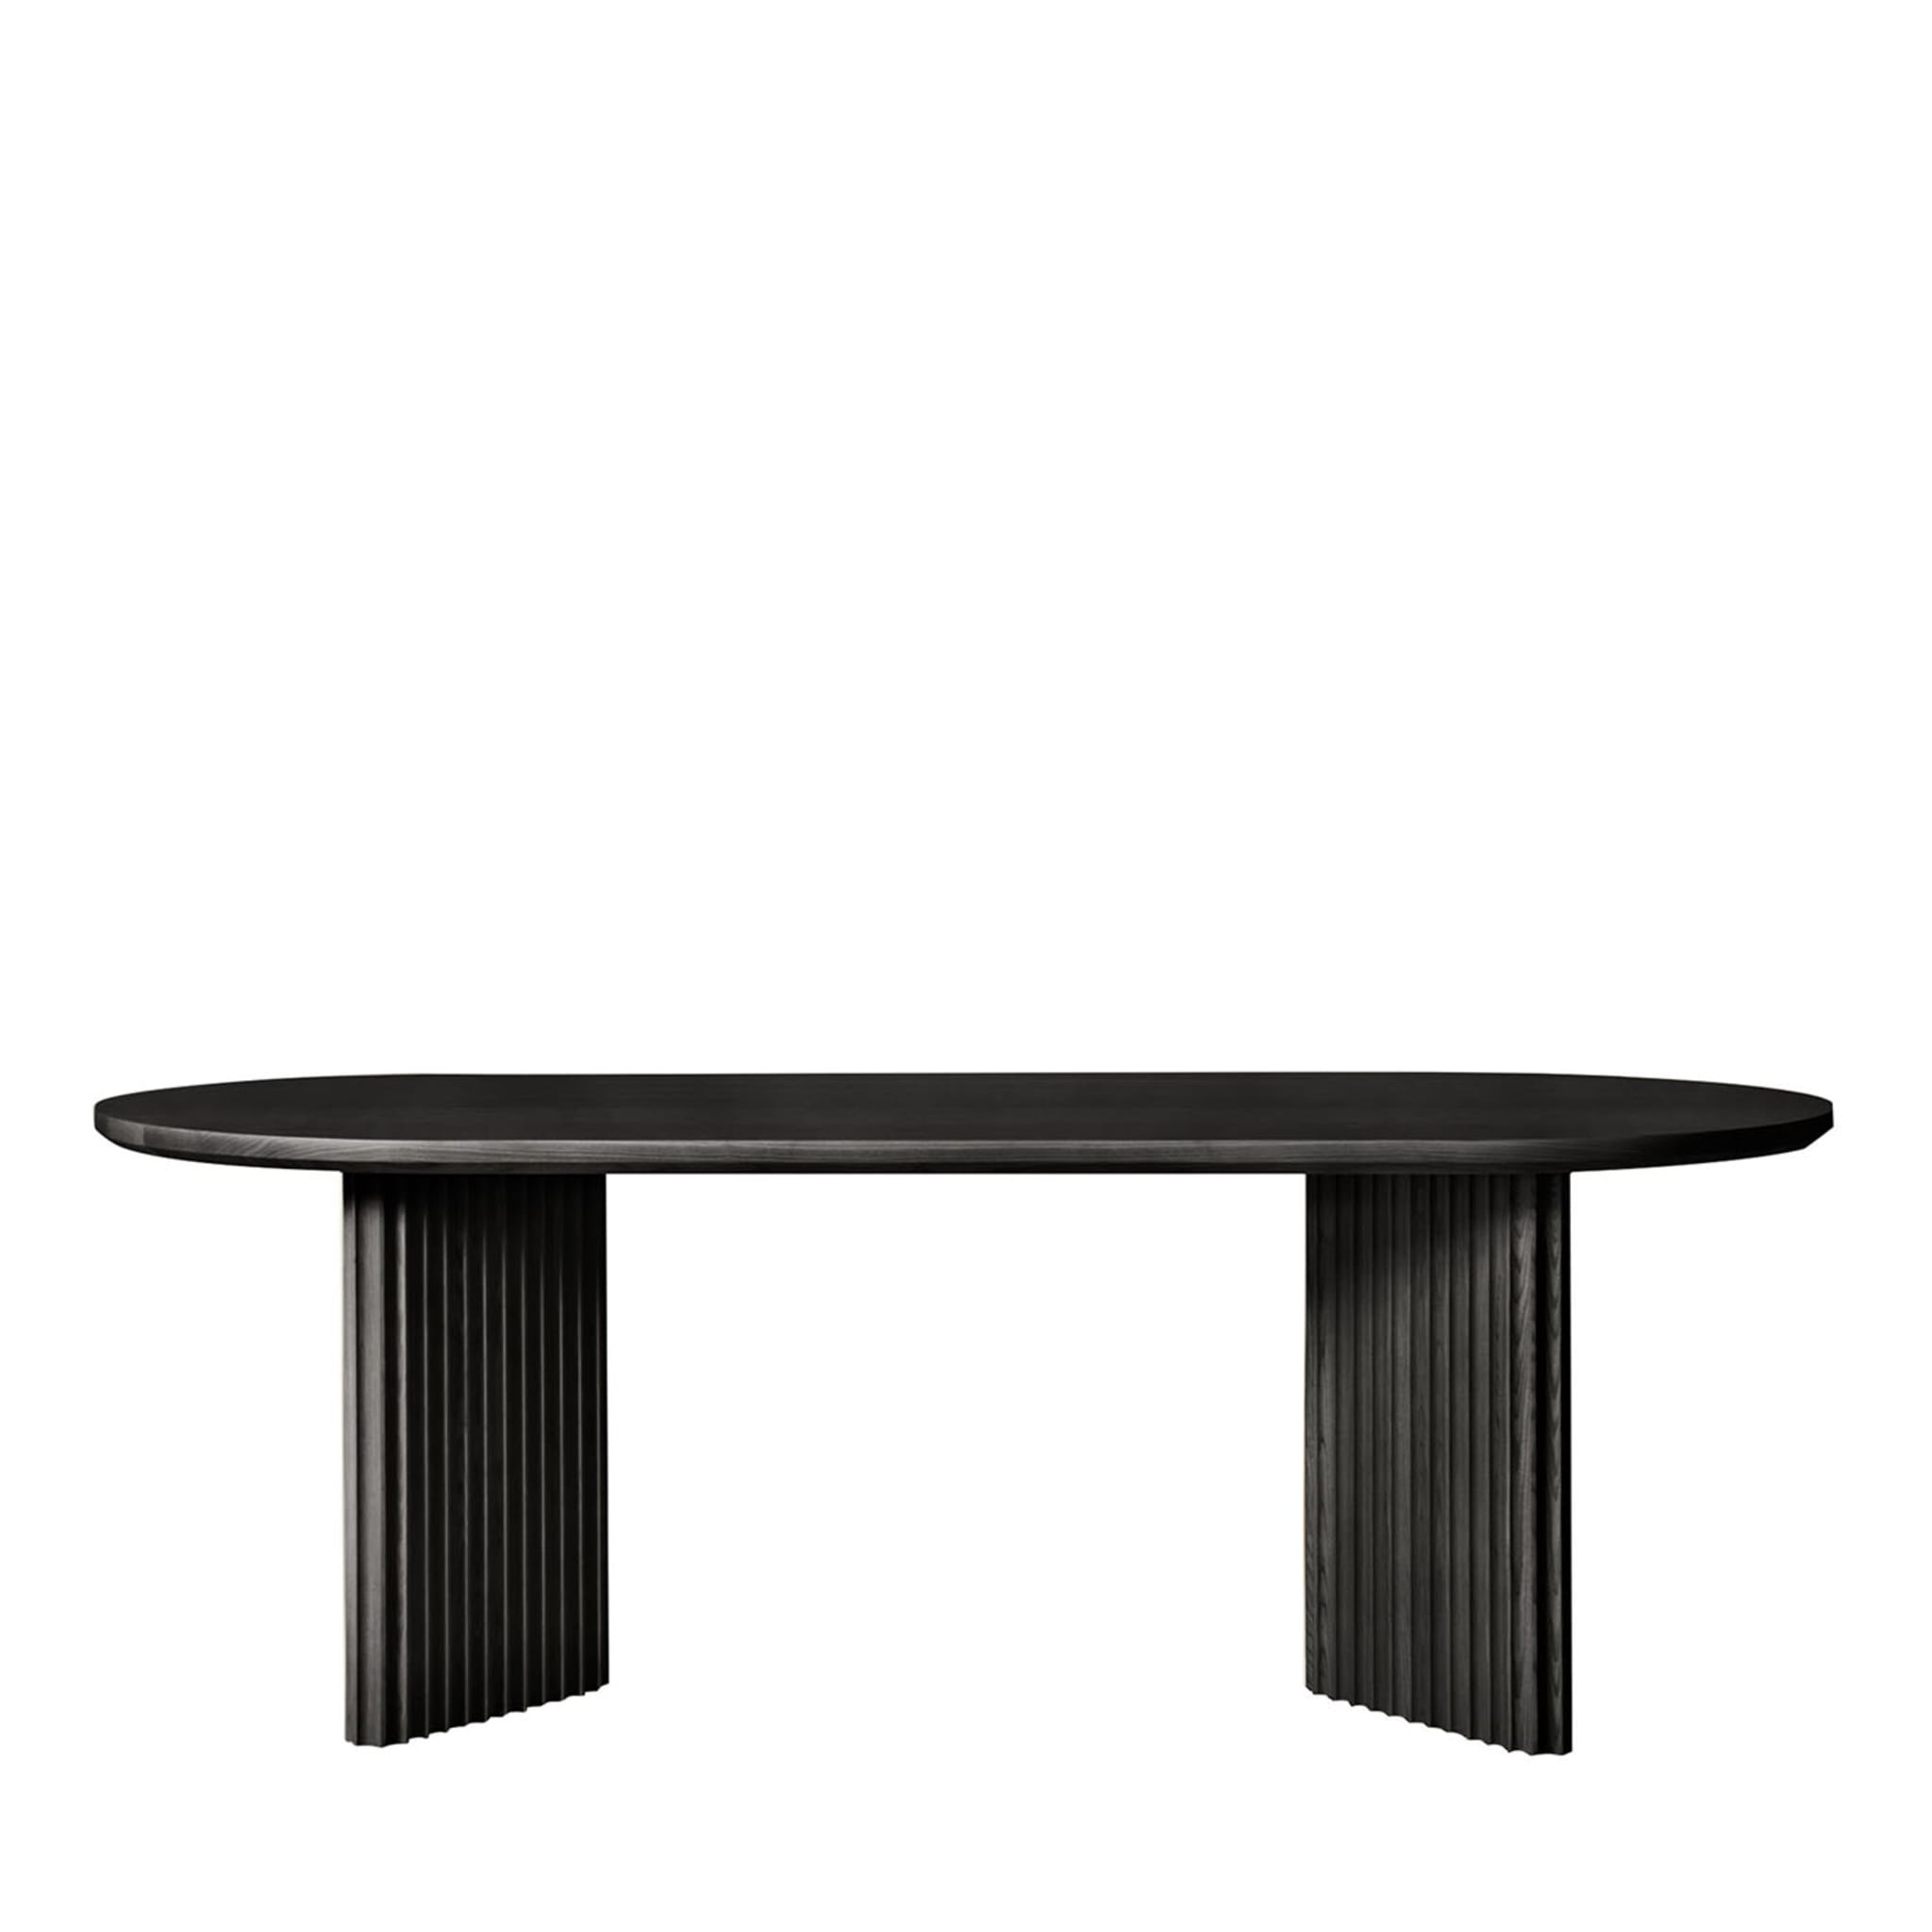 Basalto Black Ash Table - Main view